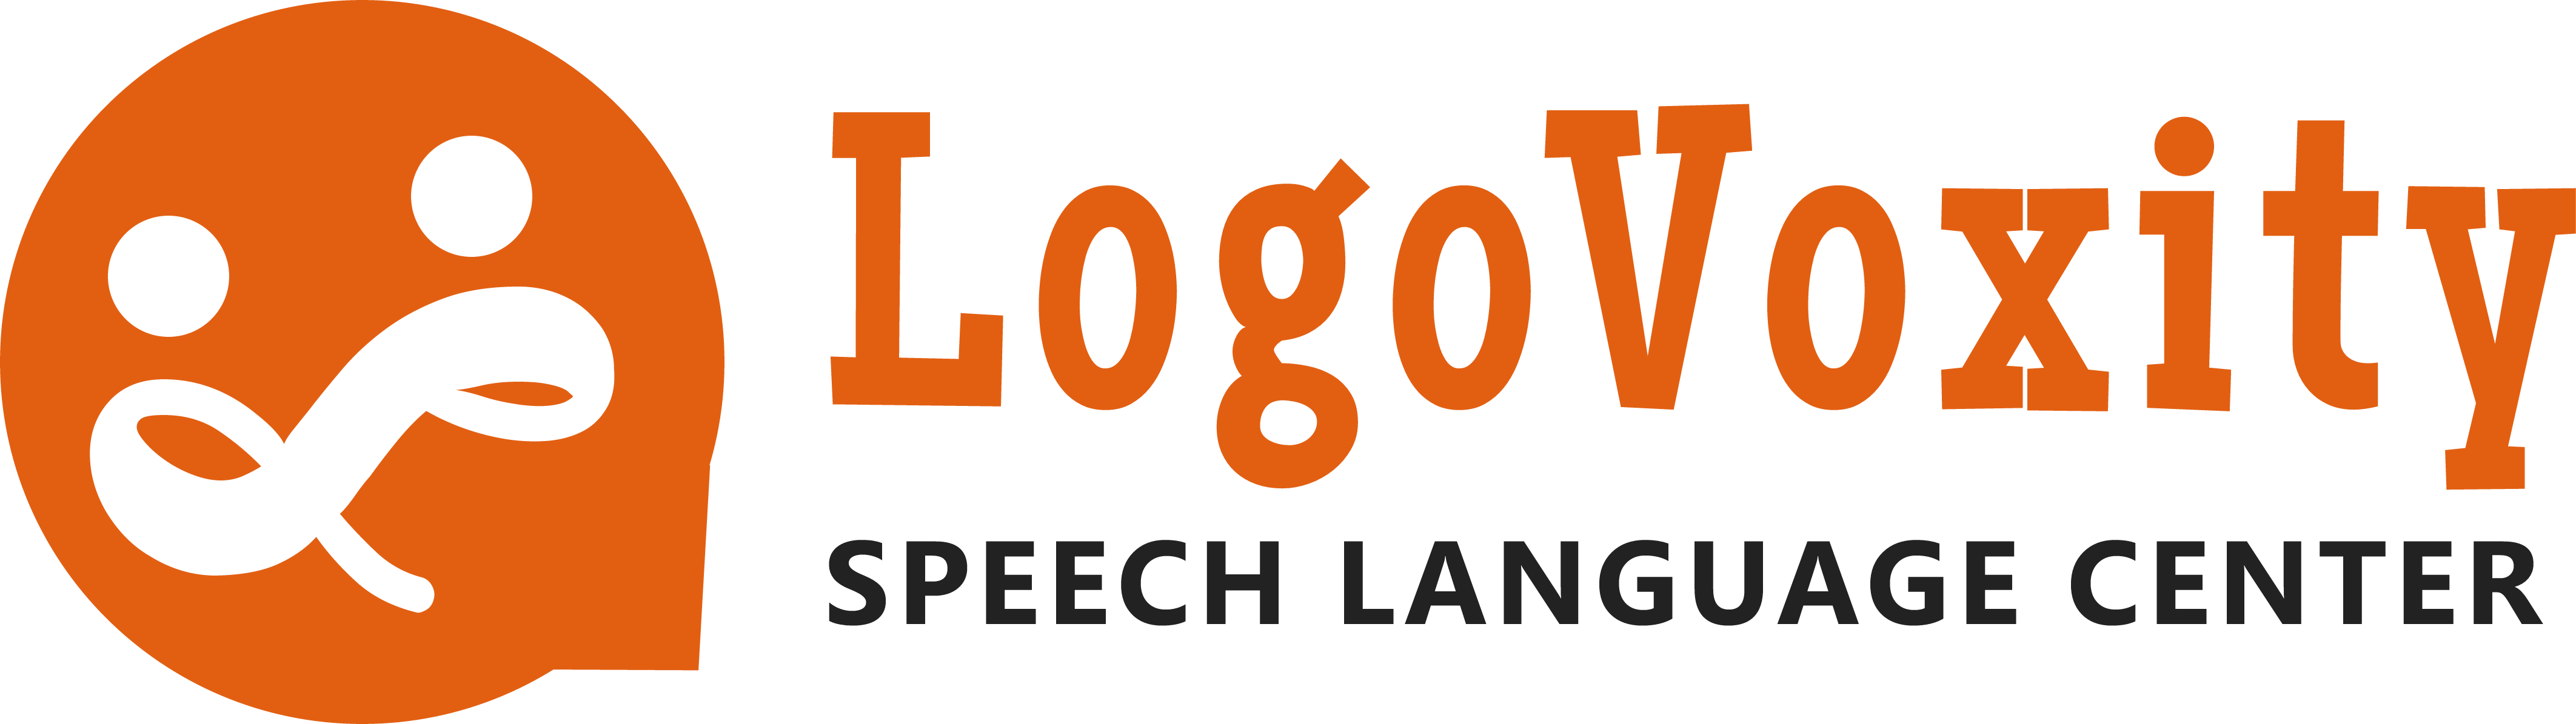 LogoVoxity Speech-Language Center